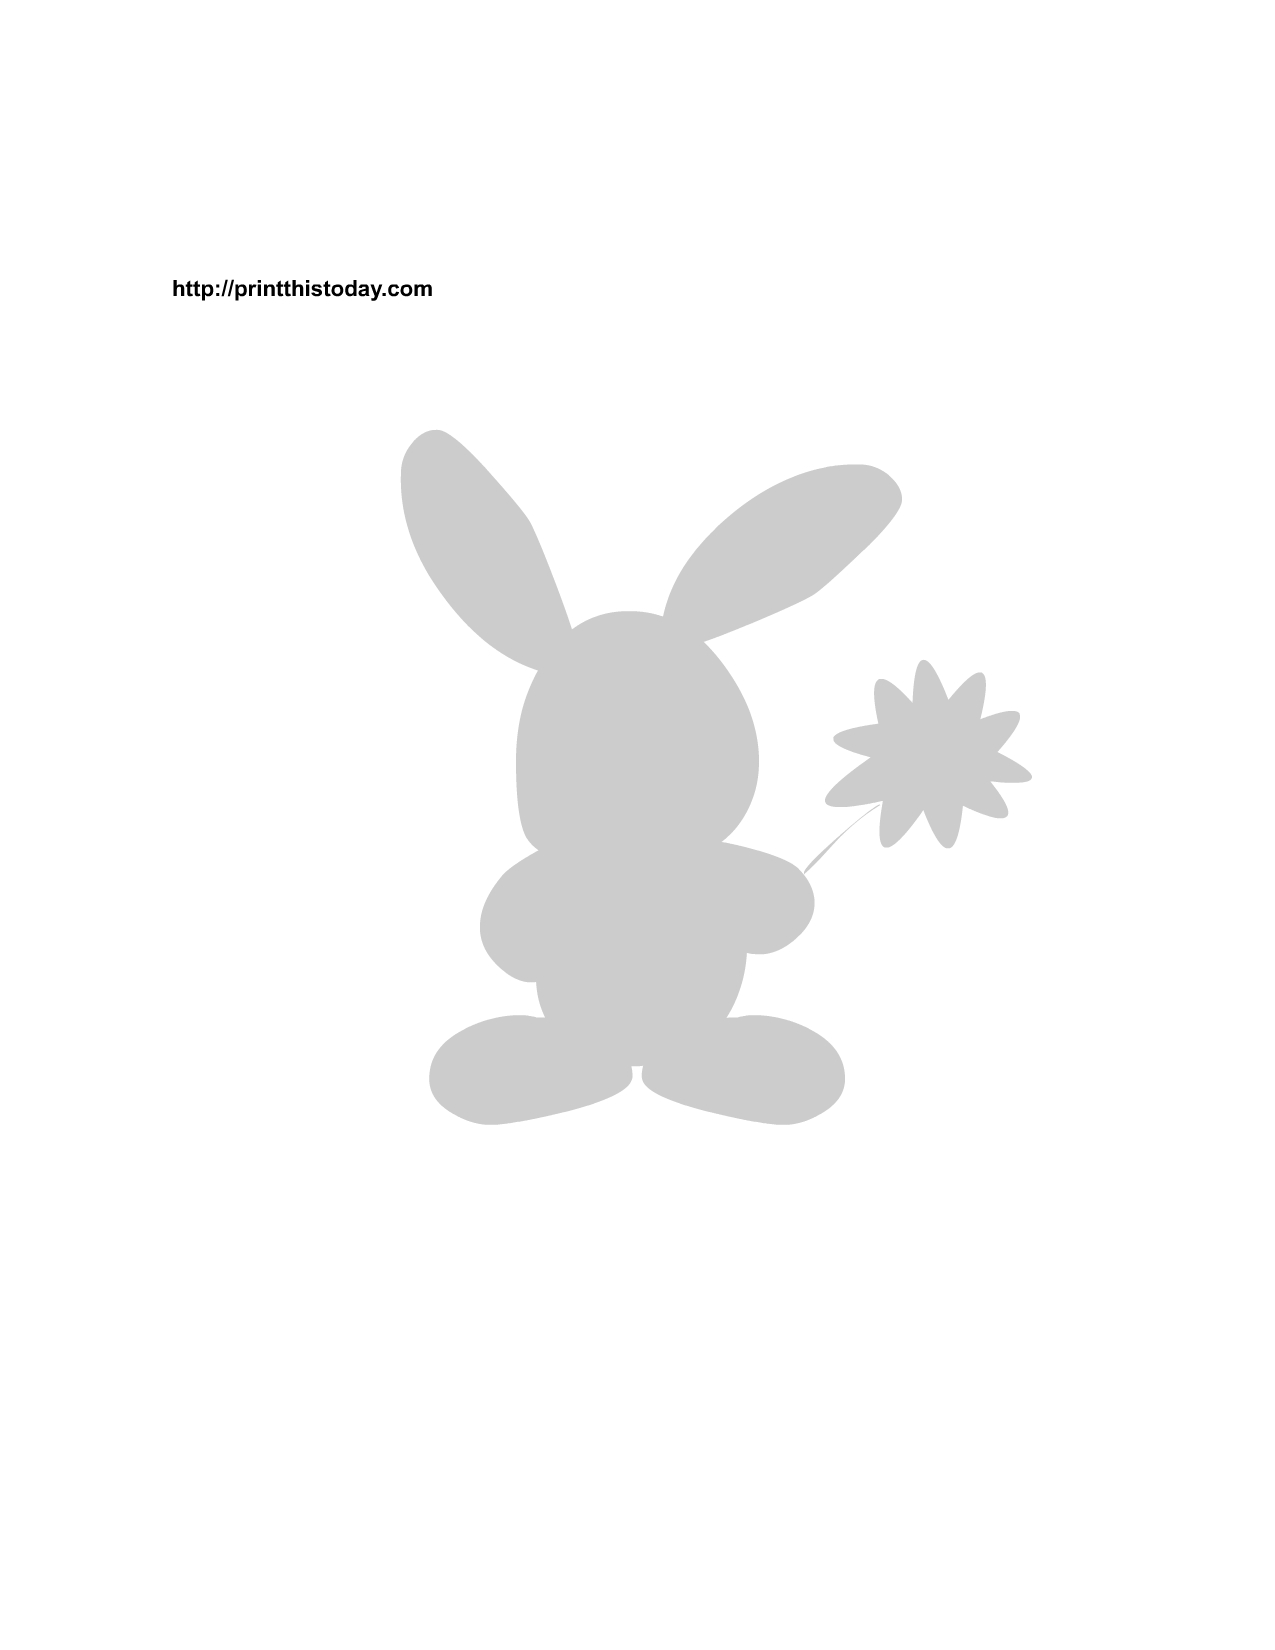 Free Printable Bunny Stencils - Free Printable Bunny Pictures